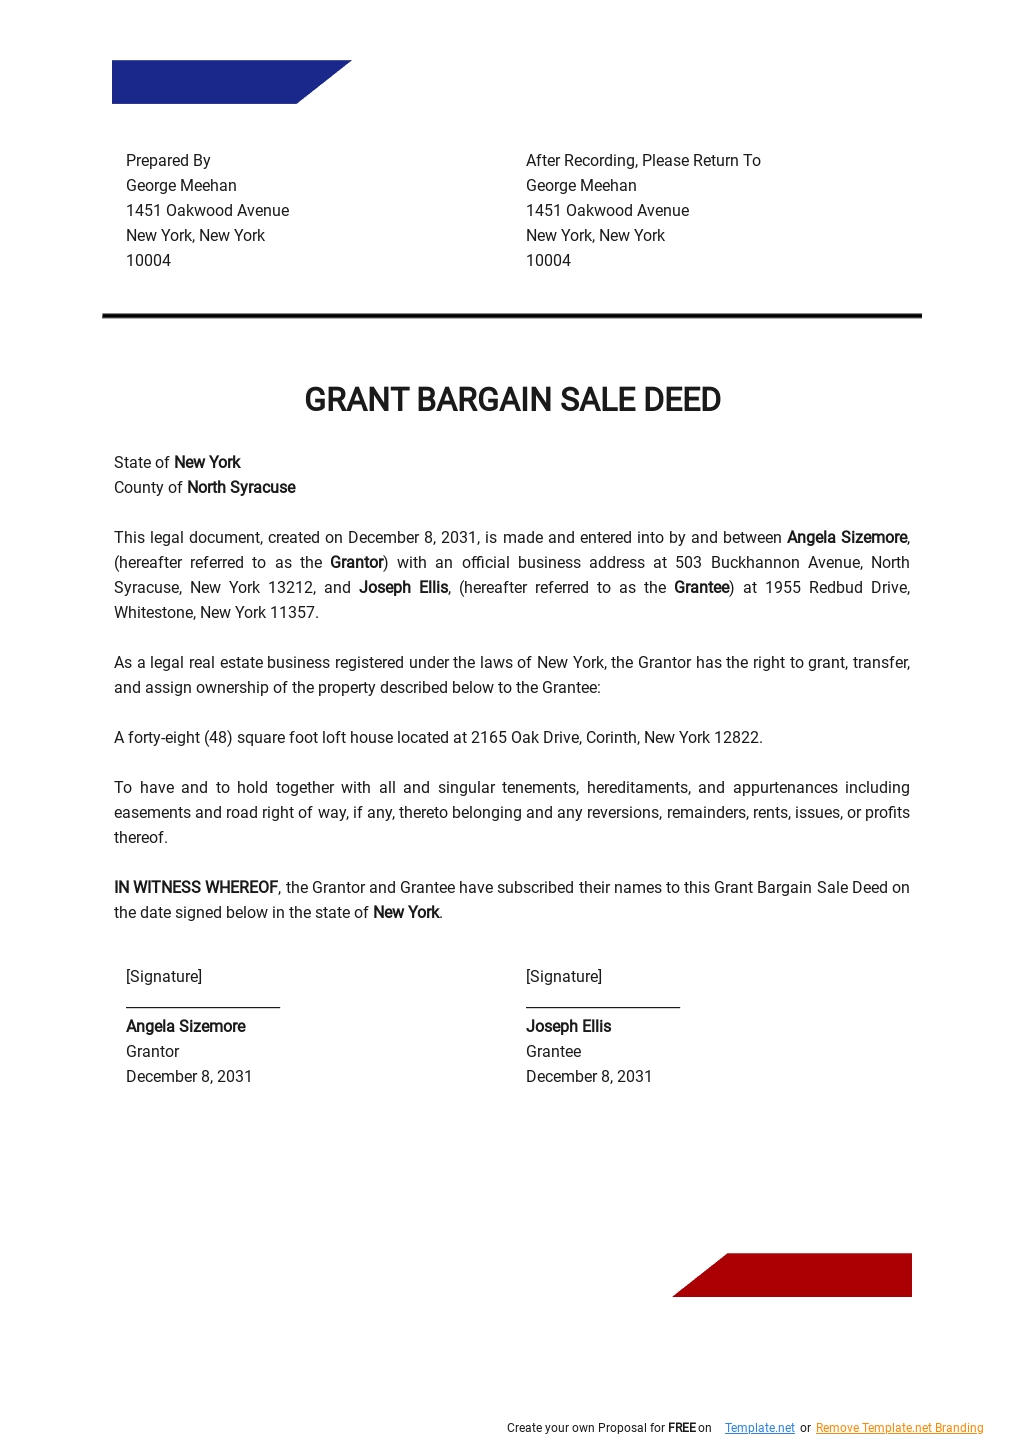 Grant Bargain Sale Deed Template